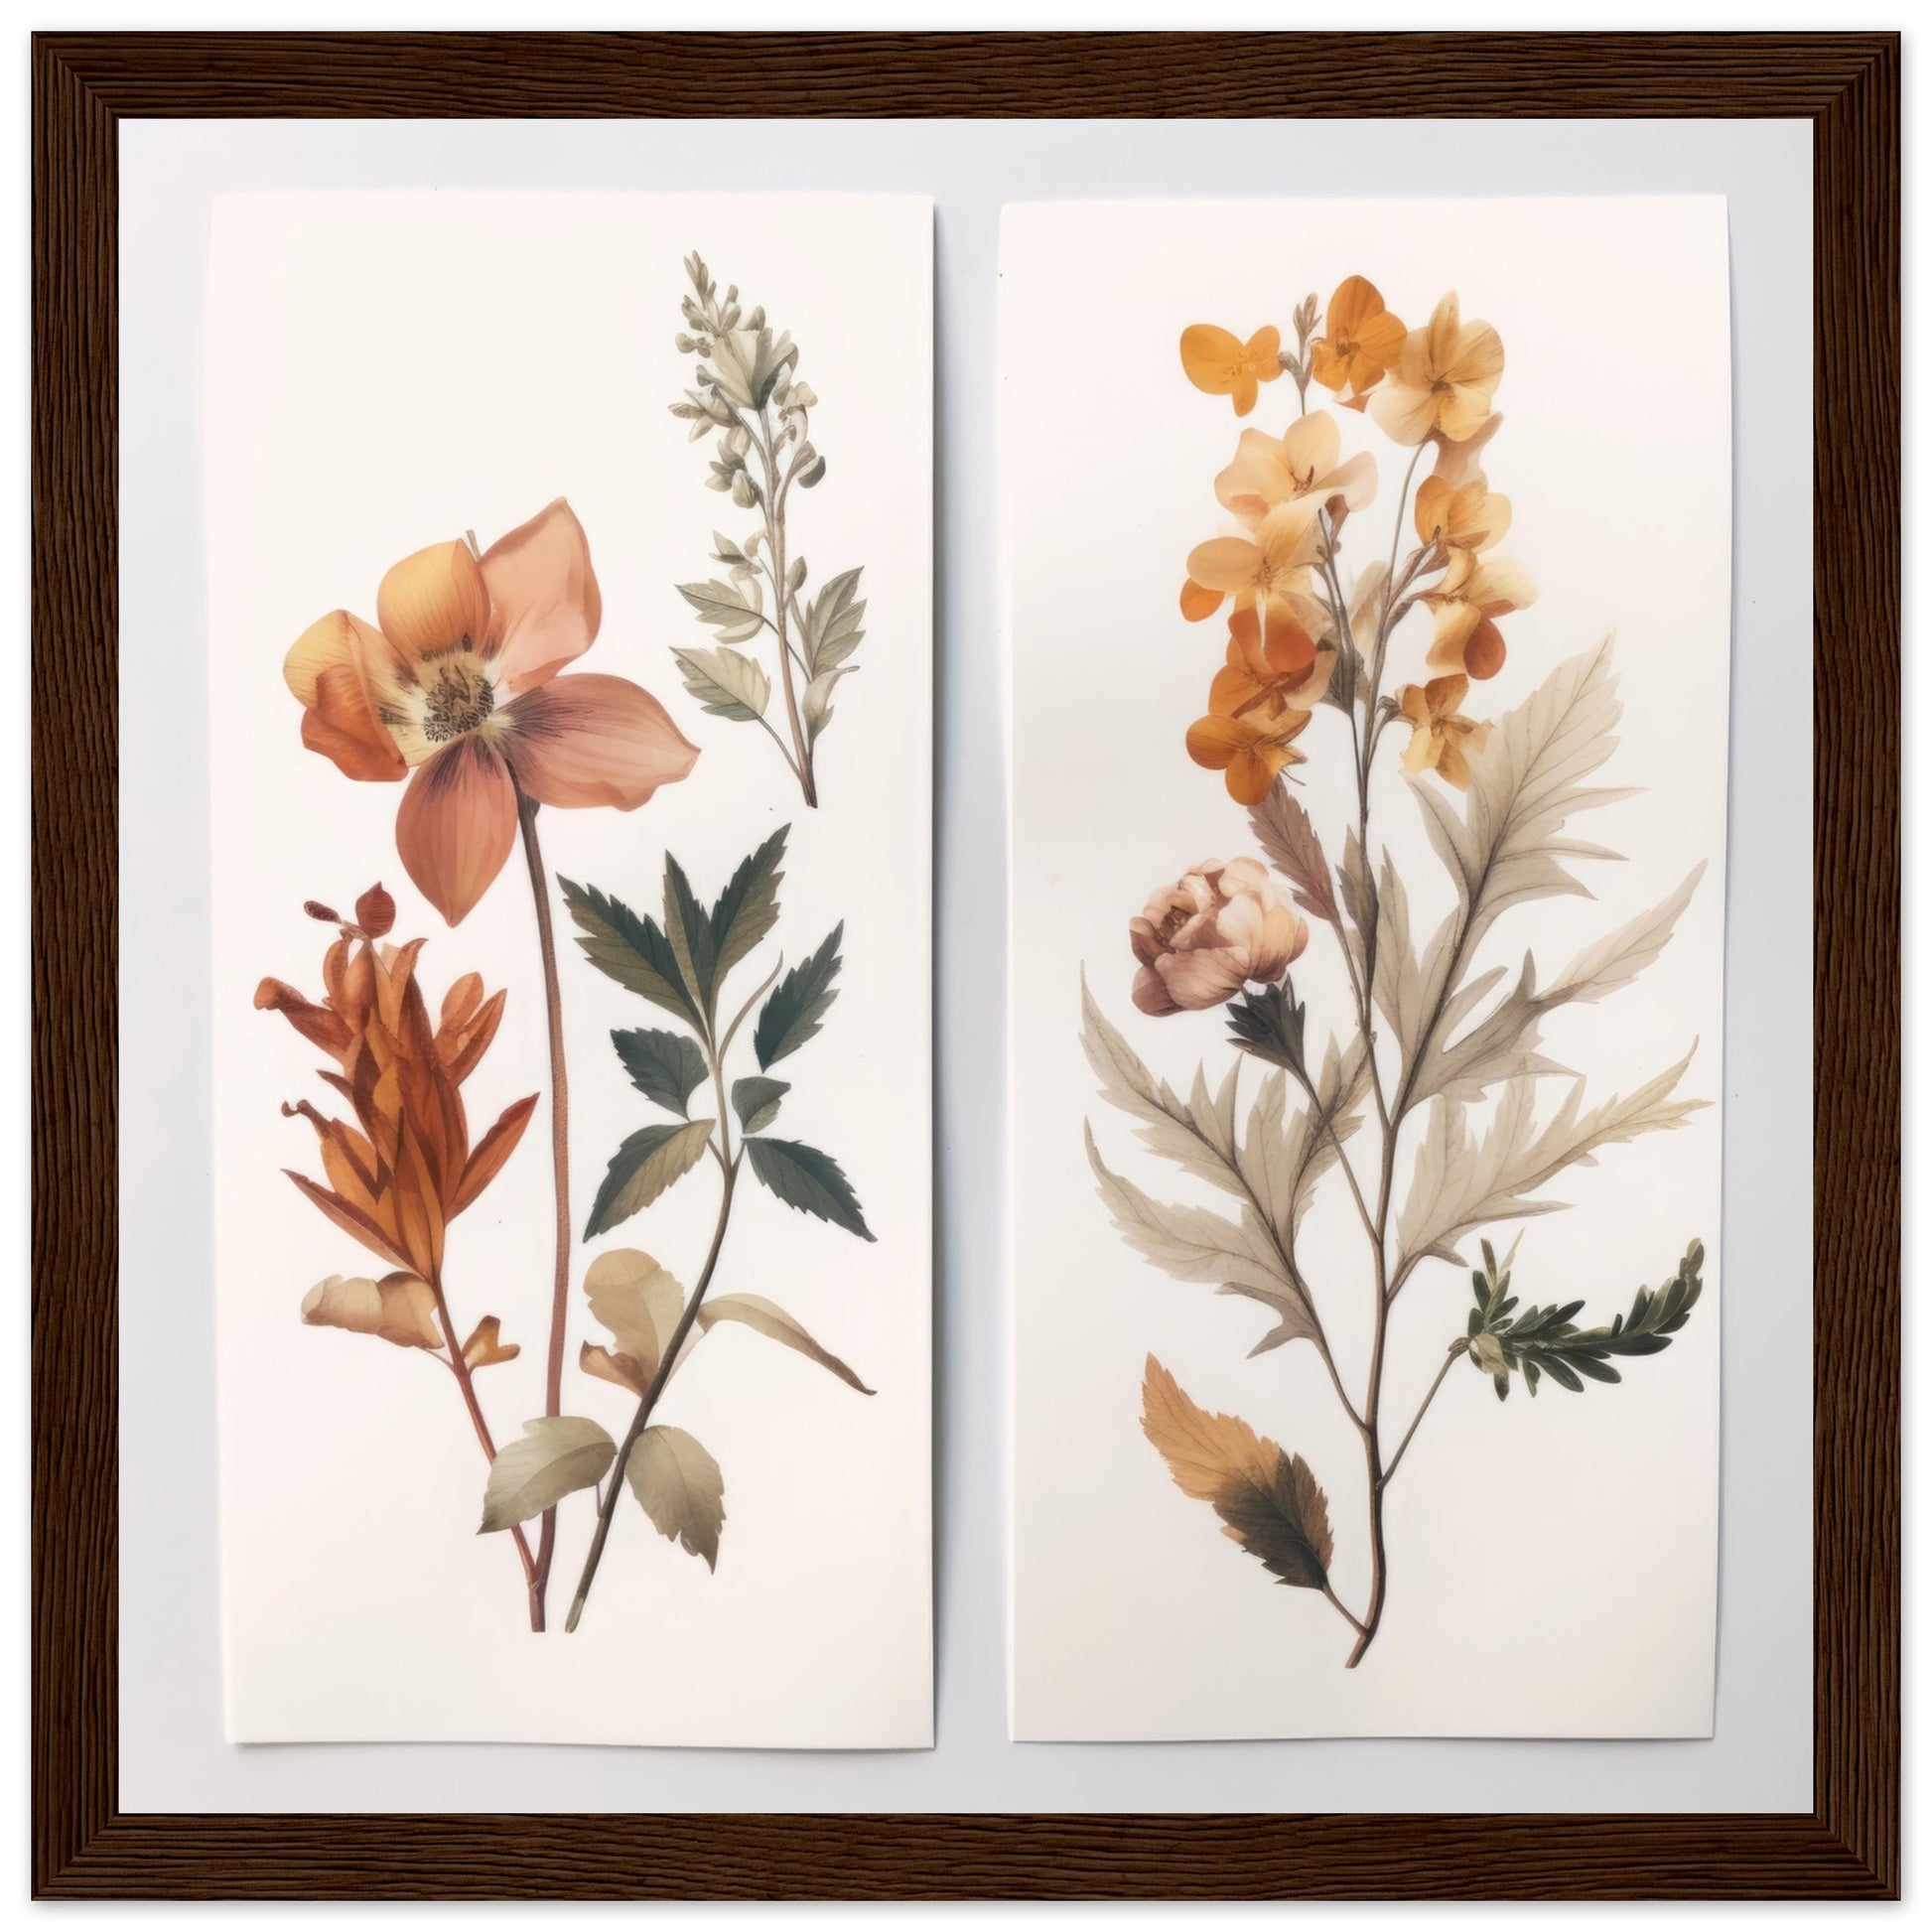 Elegance - Botanical Artwork #1- Print Room Ltd Wood frame 70x70 cm / 28x28"